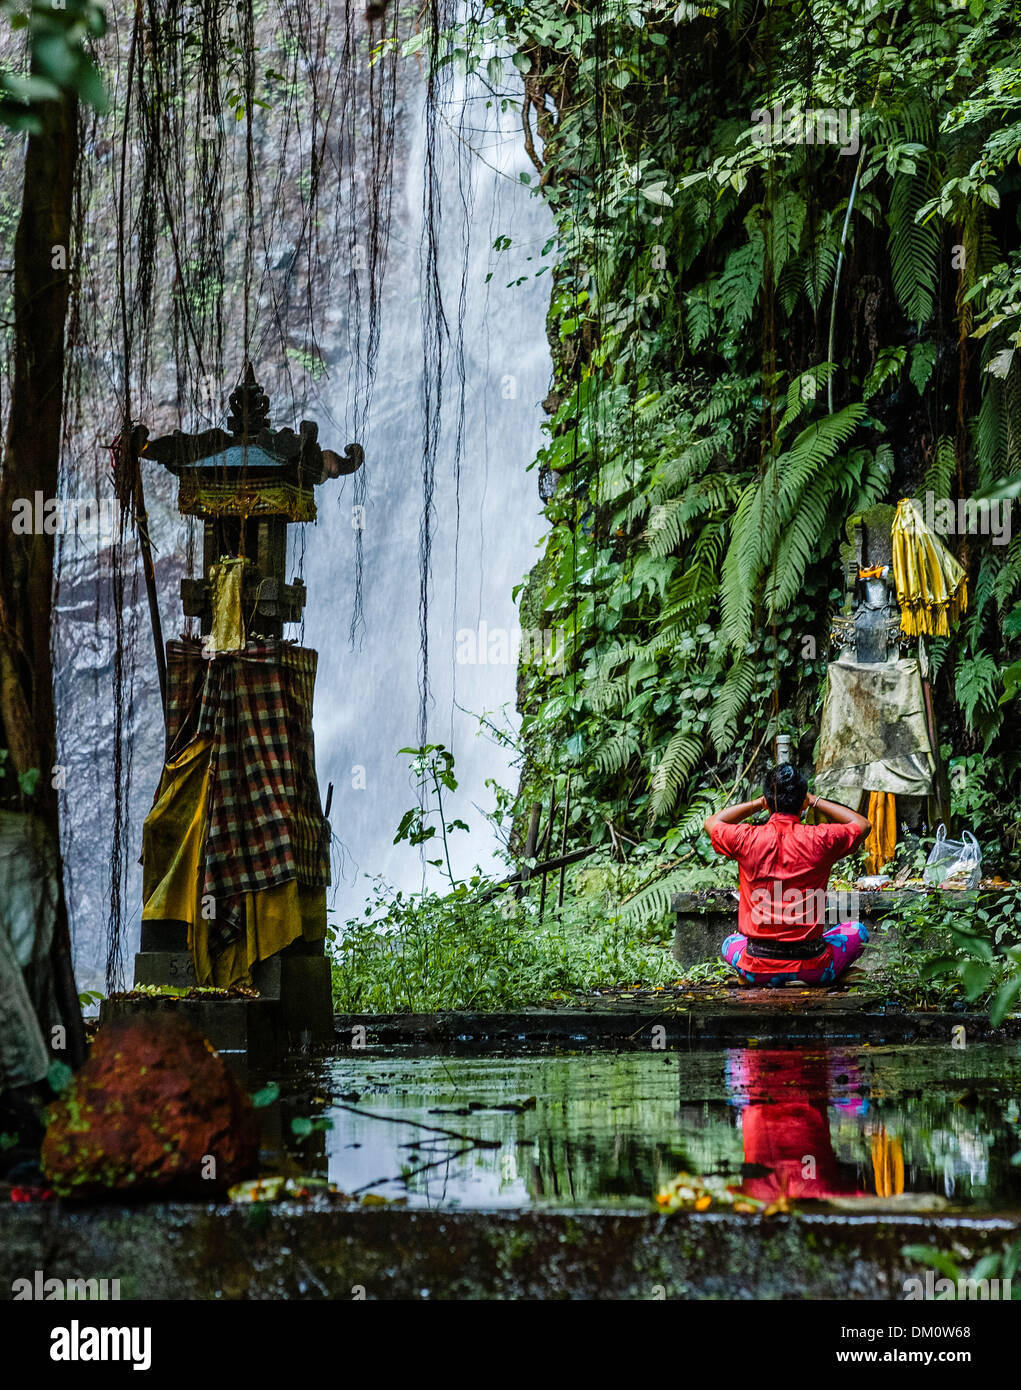 Hindu worshiper at waterfall in Tejakula, Bali Indonesia Stock Photo